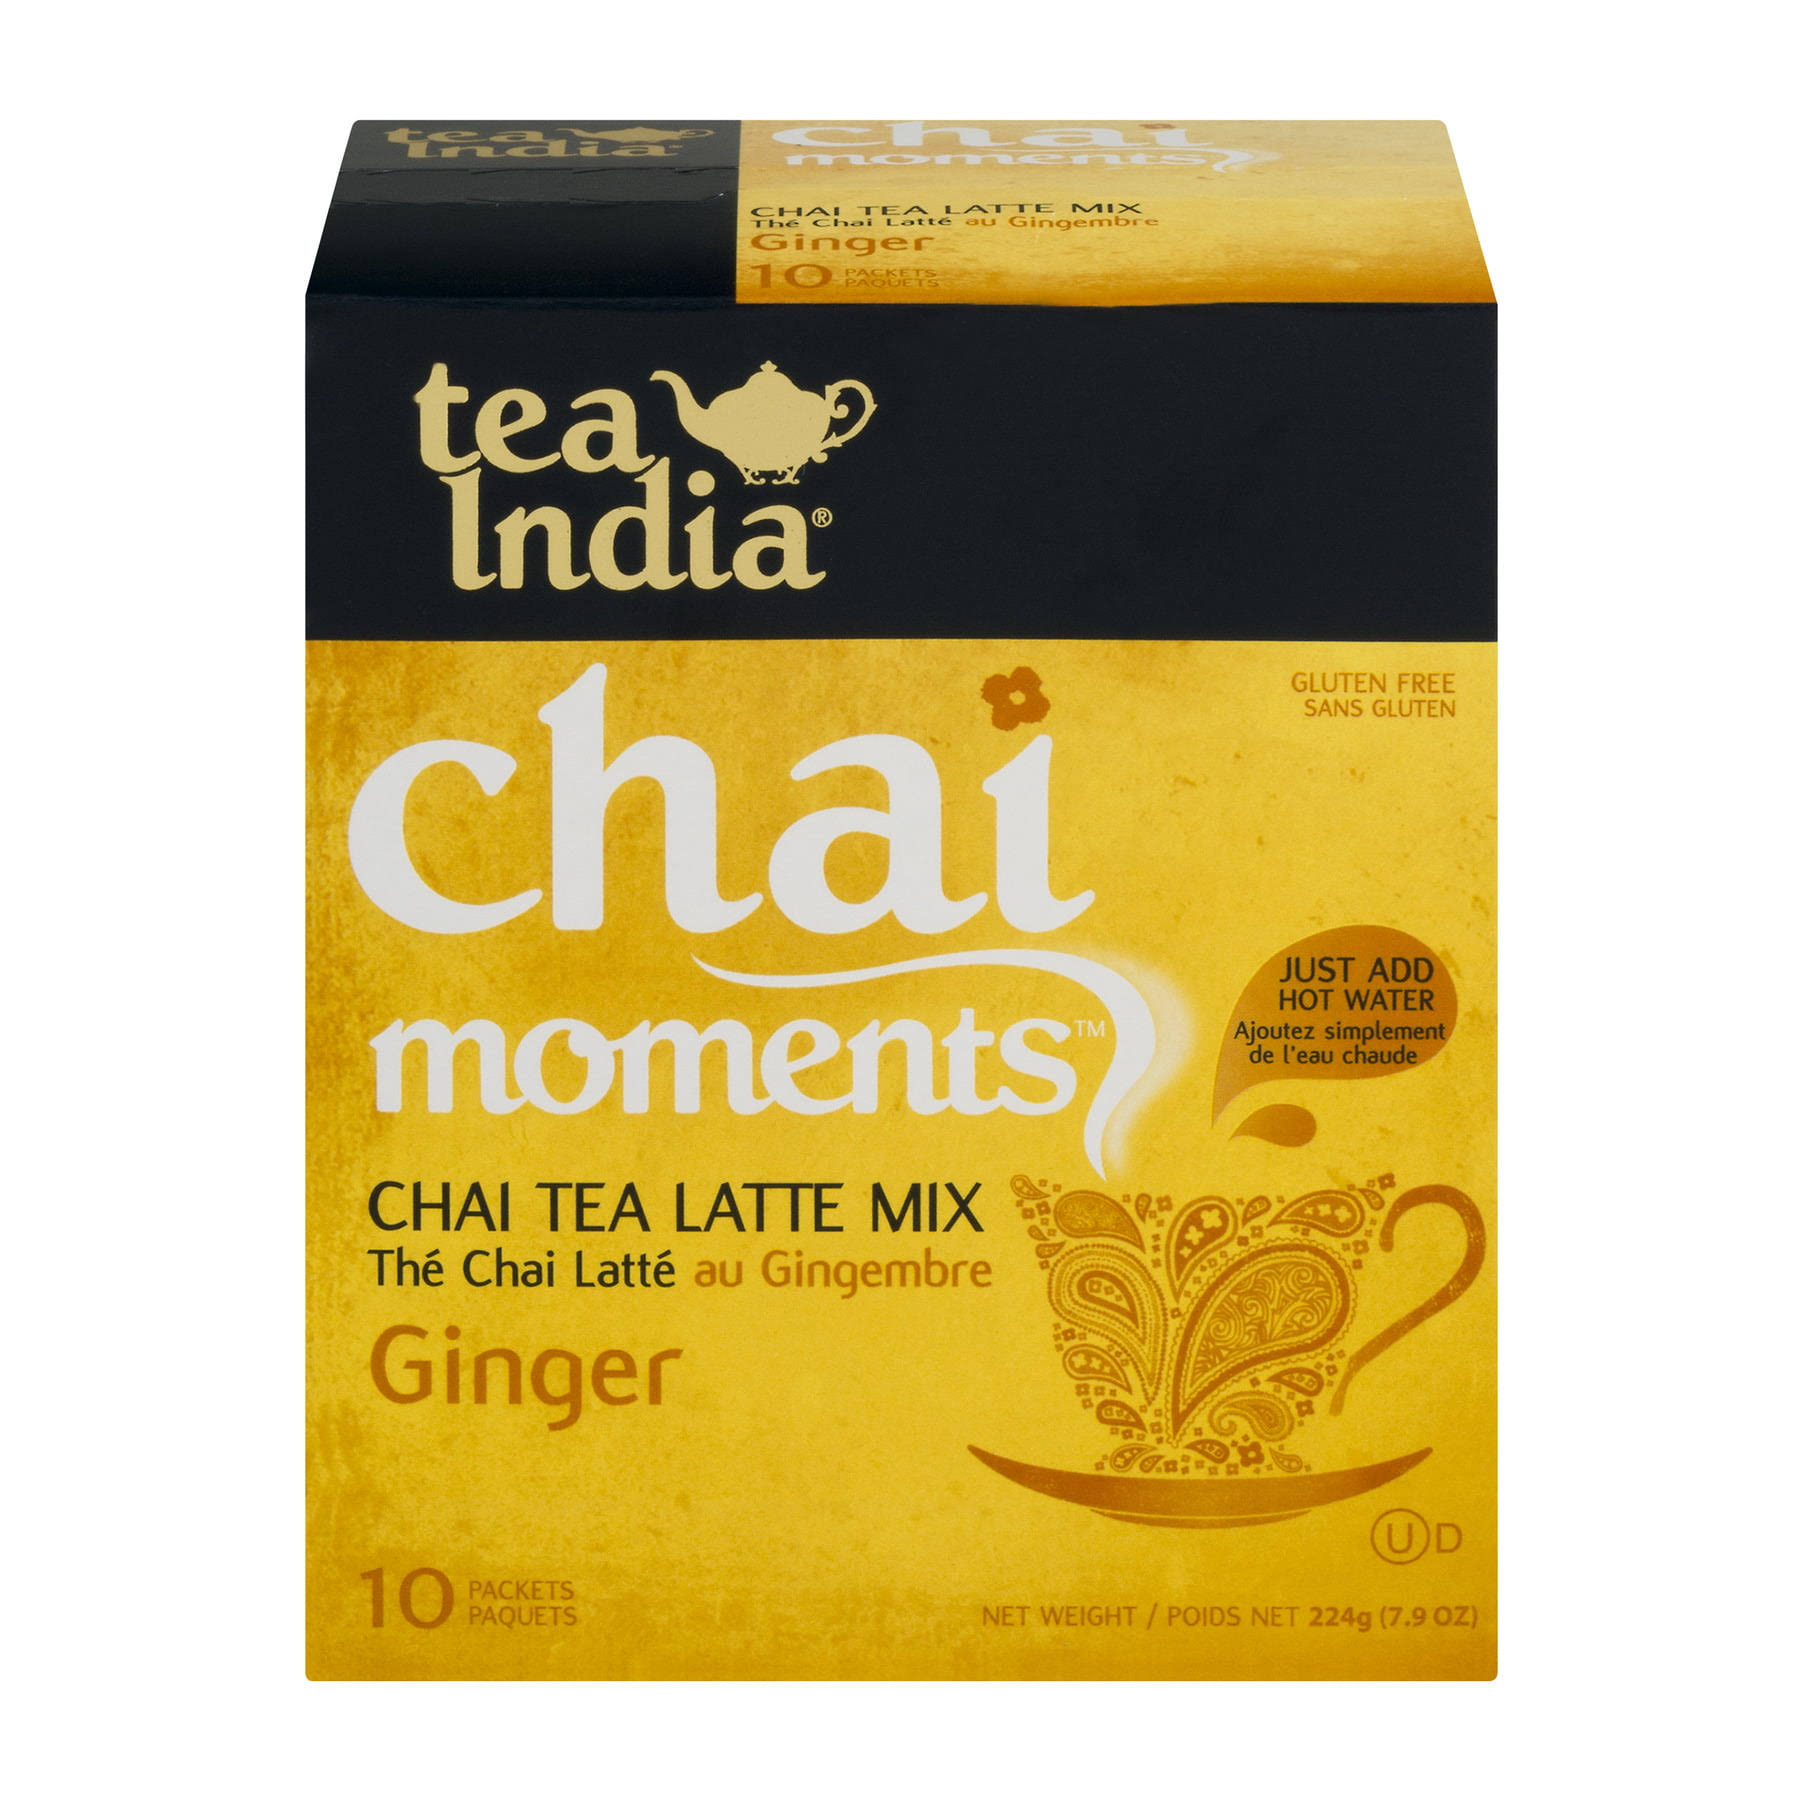 Tea India Ginger Chai Tea Latte Mix - 10 bags, 7.9 oz box